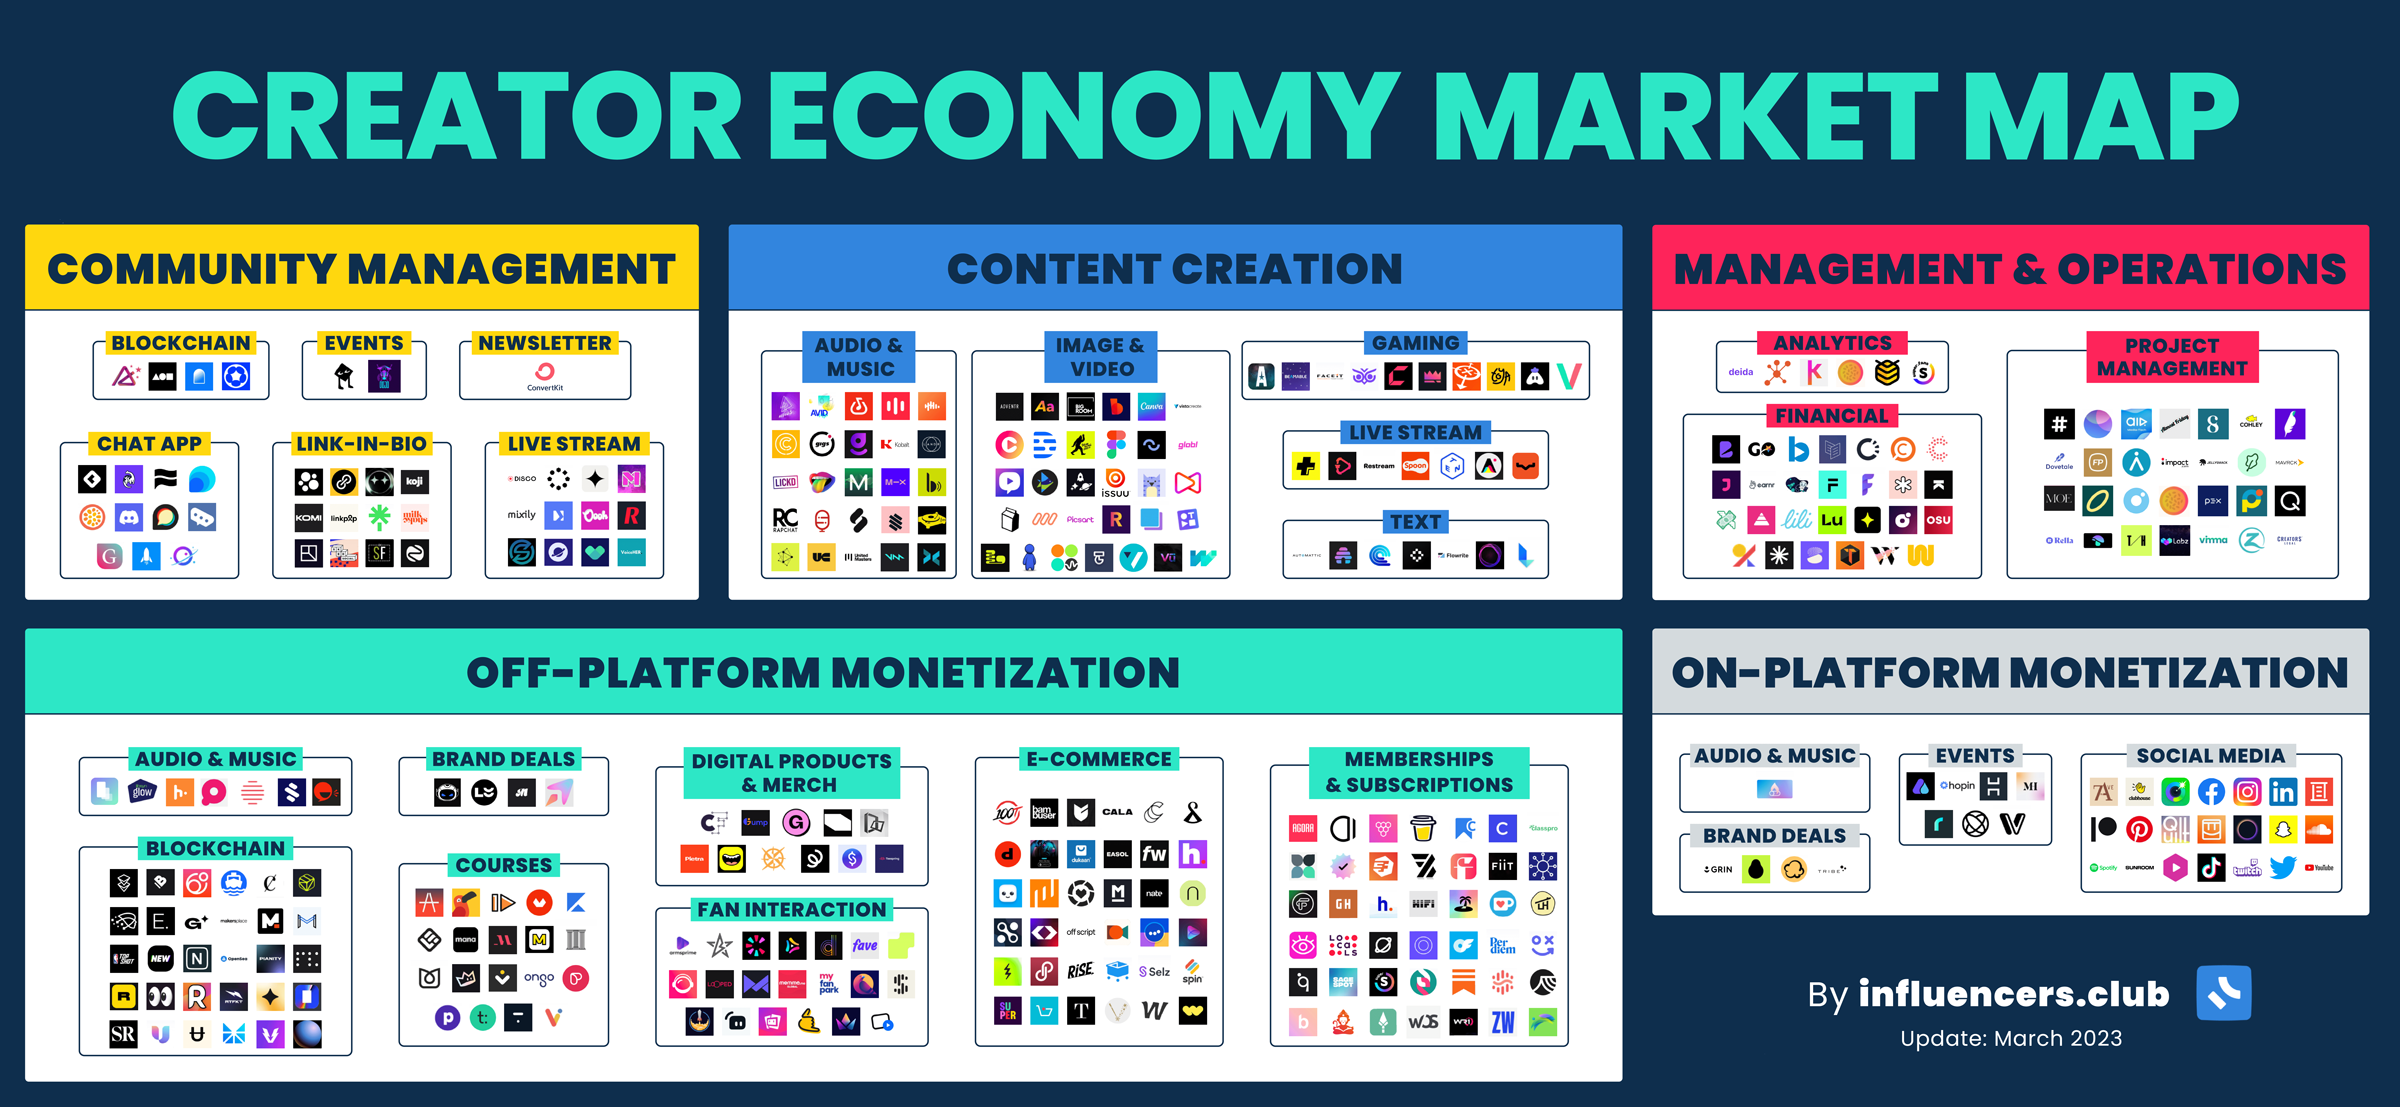 Instagram Data for the Creator Economy